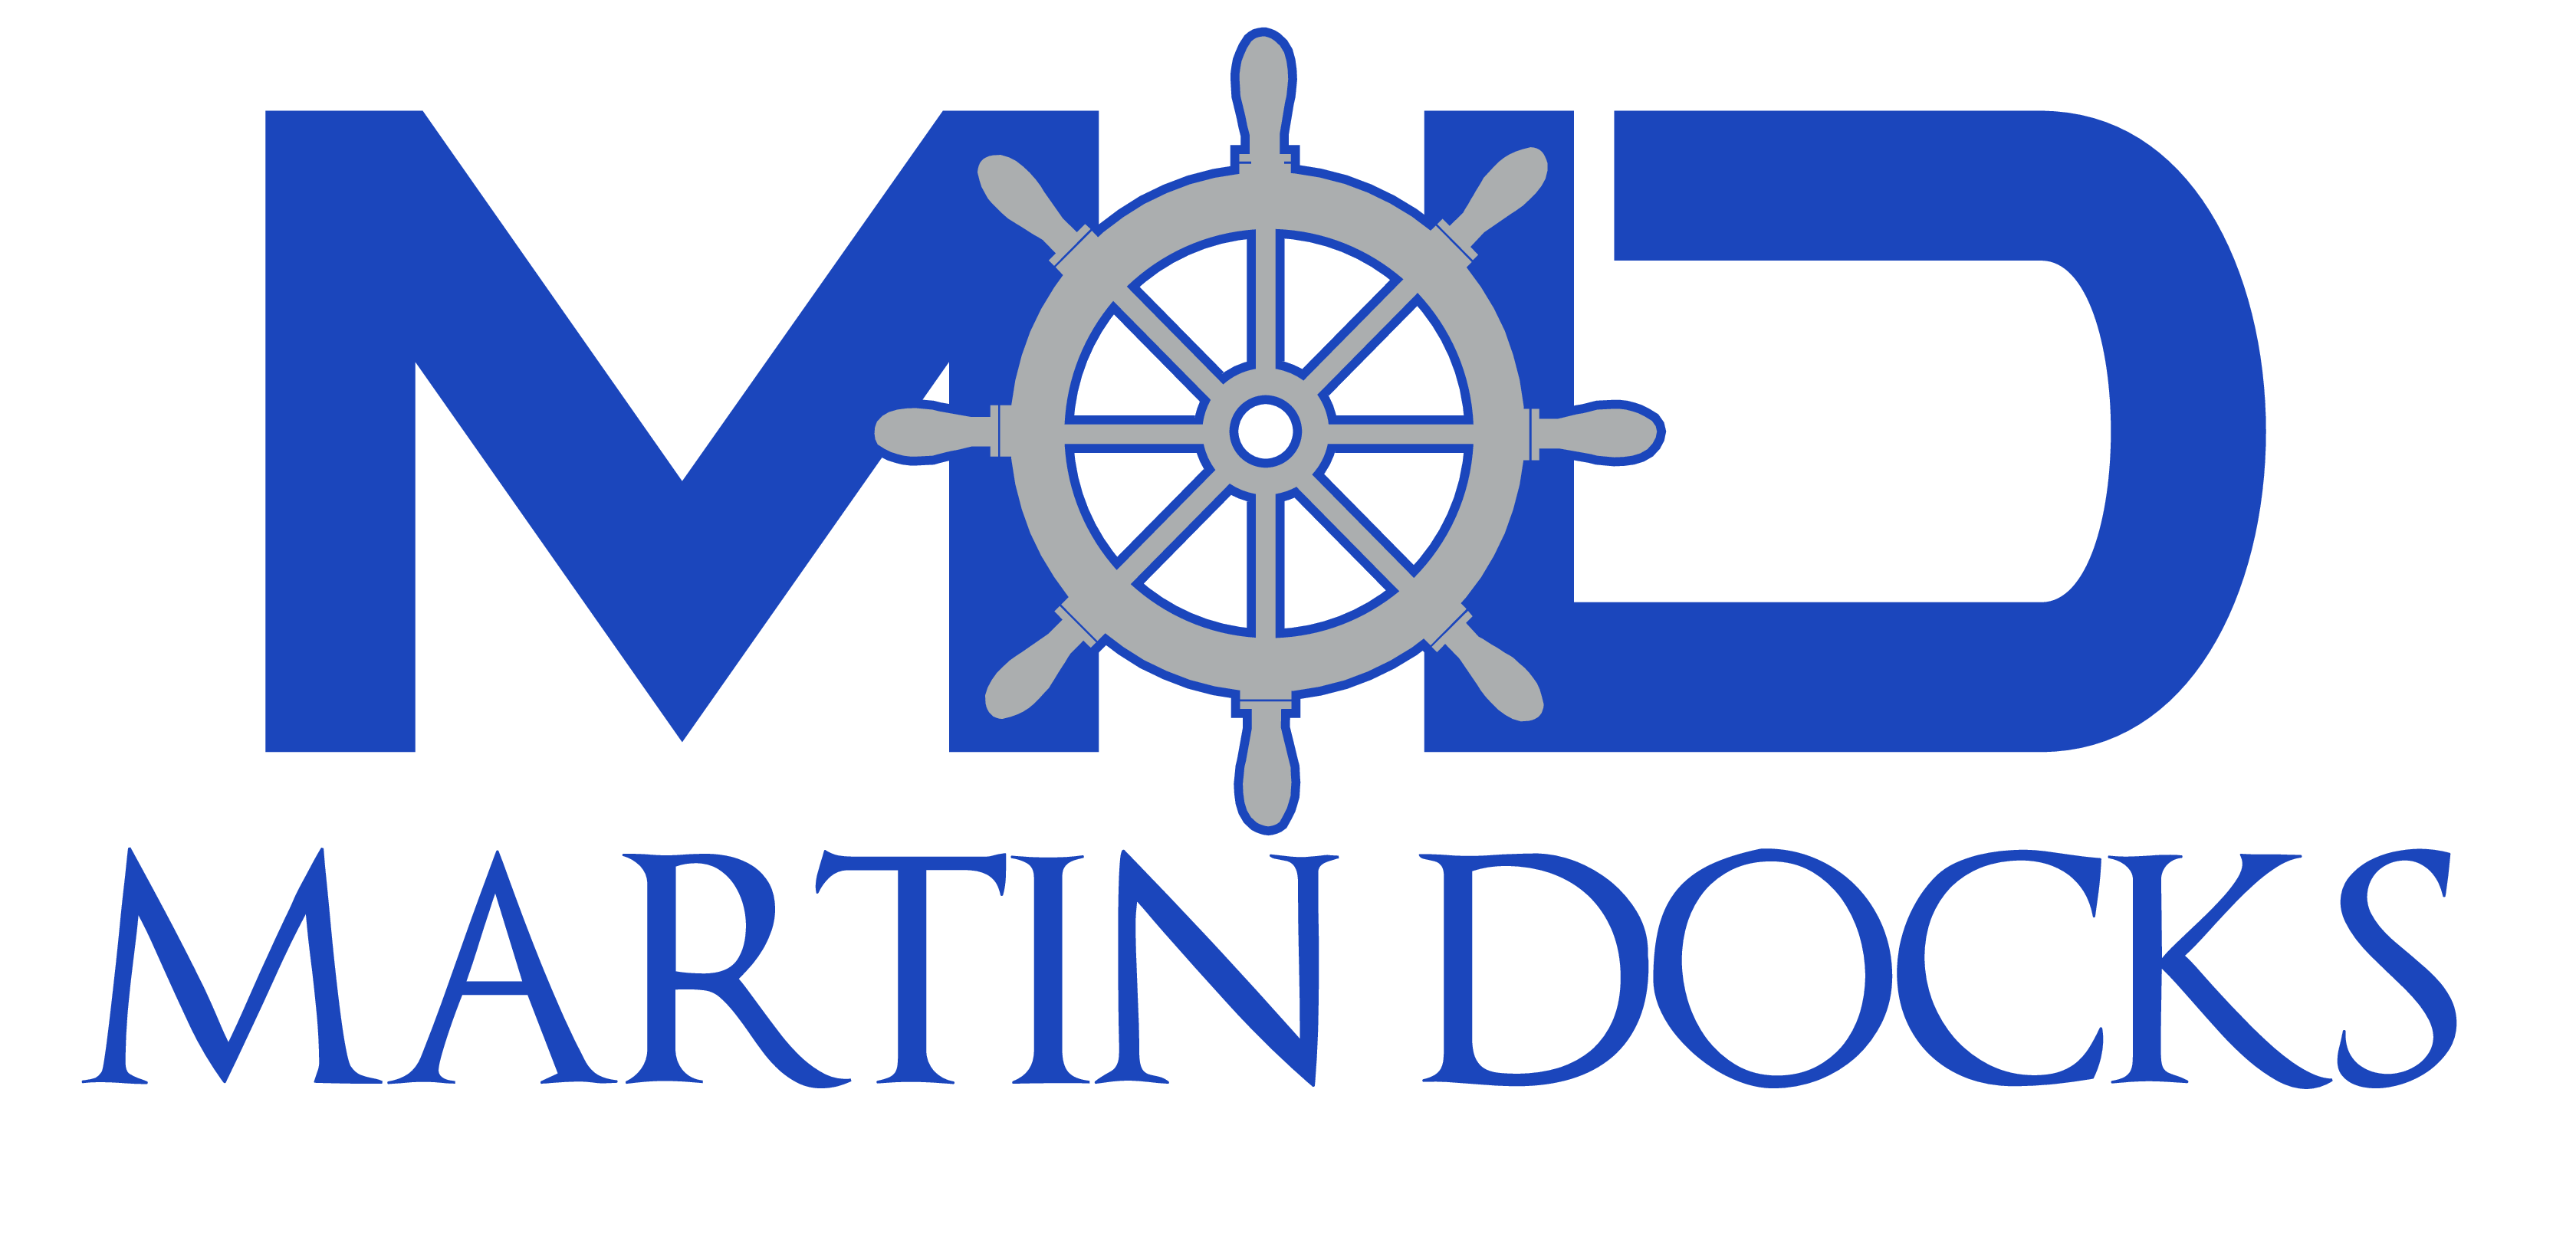 Martin Docks logo